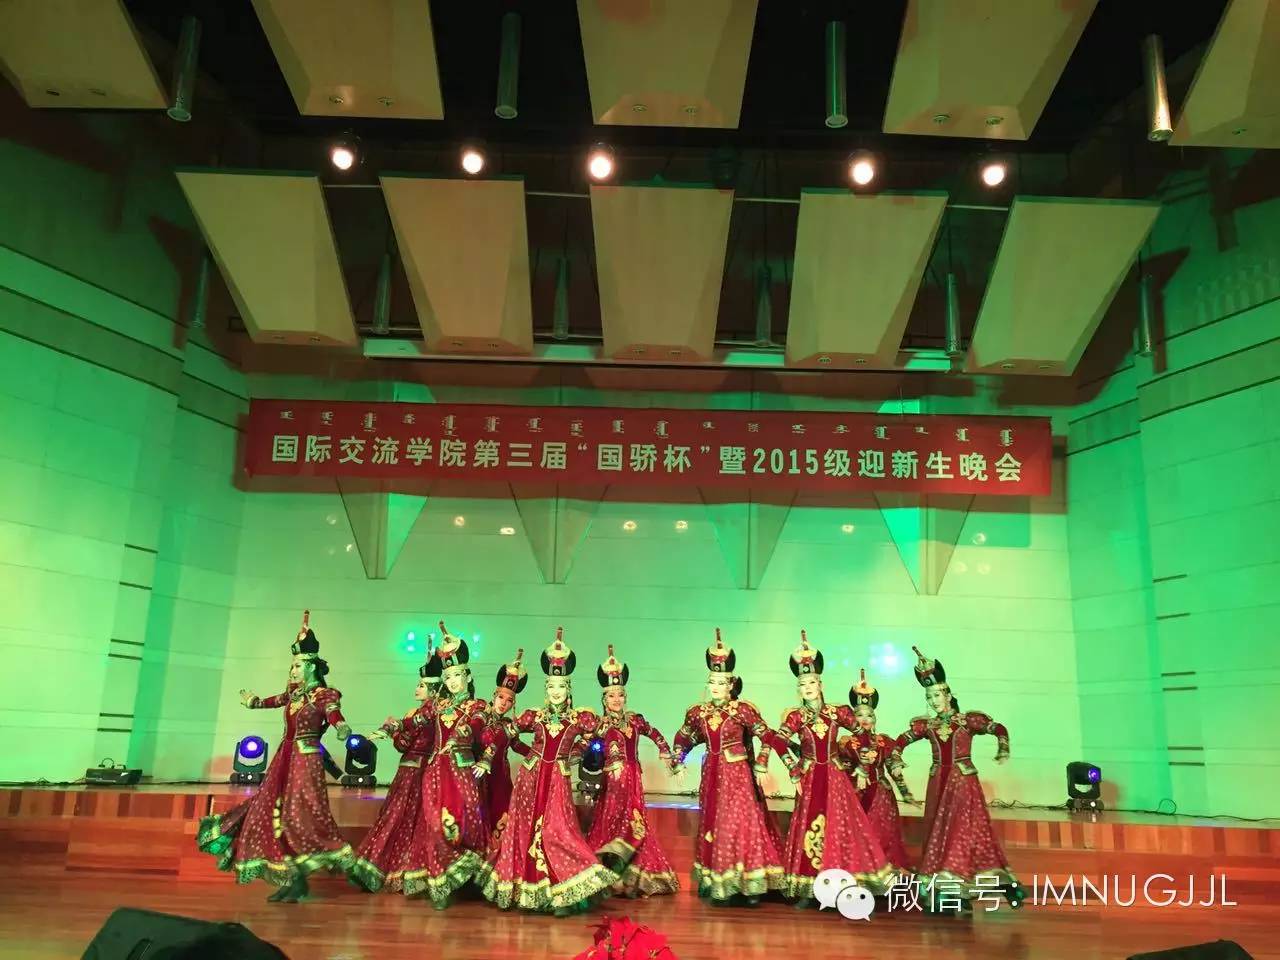 The 3rd Guojiao Cup Freshman Arts Show Party